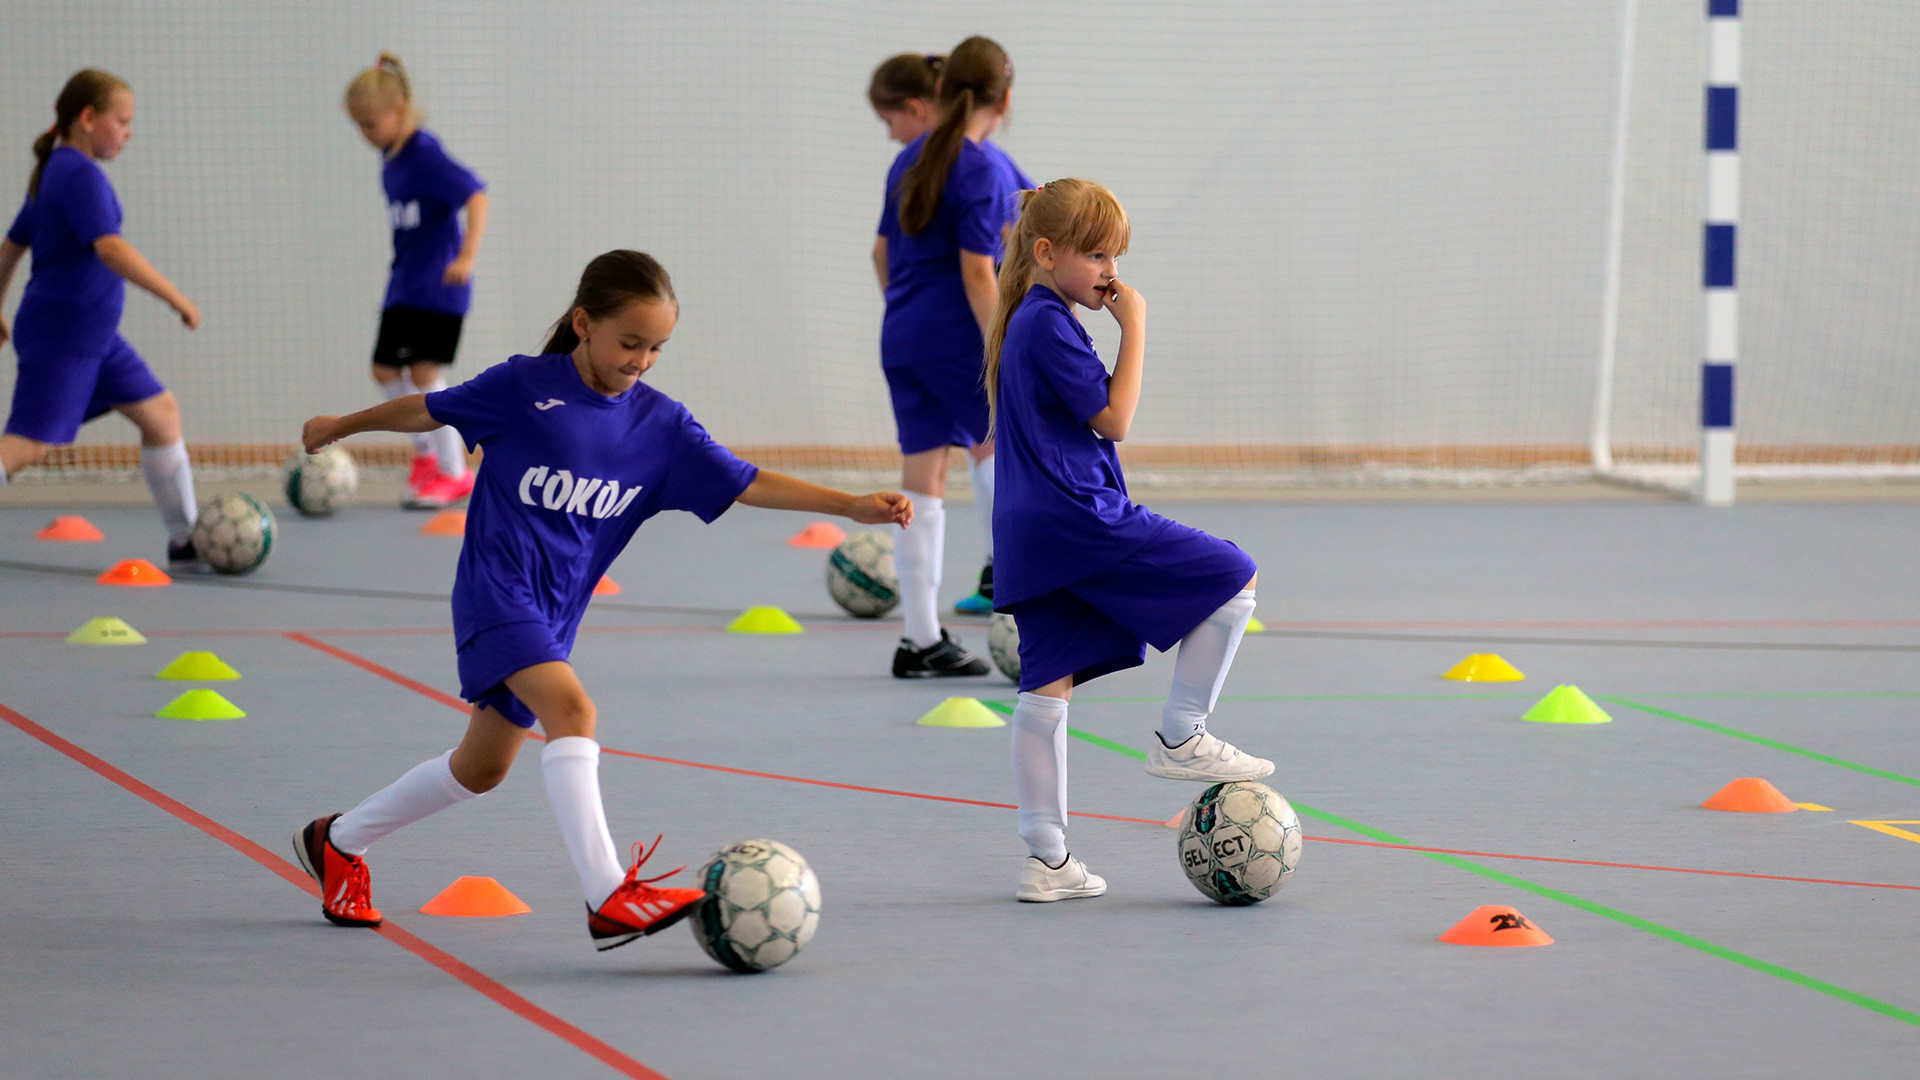 Gadis-gadis saat sesi latihan sepak bola.

